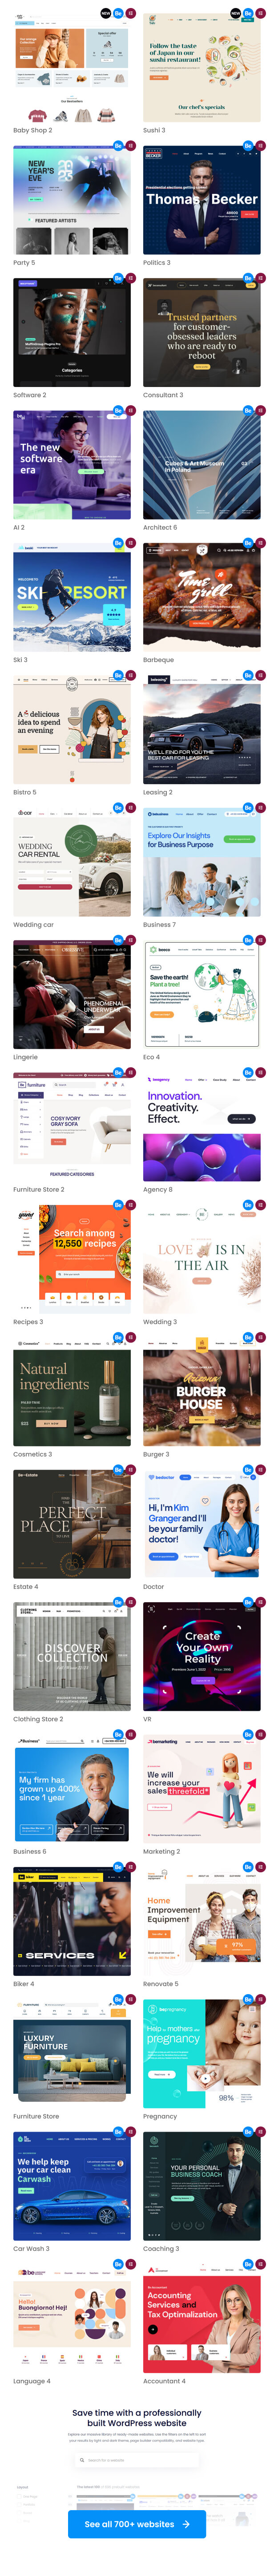 Betheme | Responsive Multipurpose WordPress & WooCommerce Theme - 24